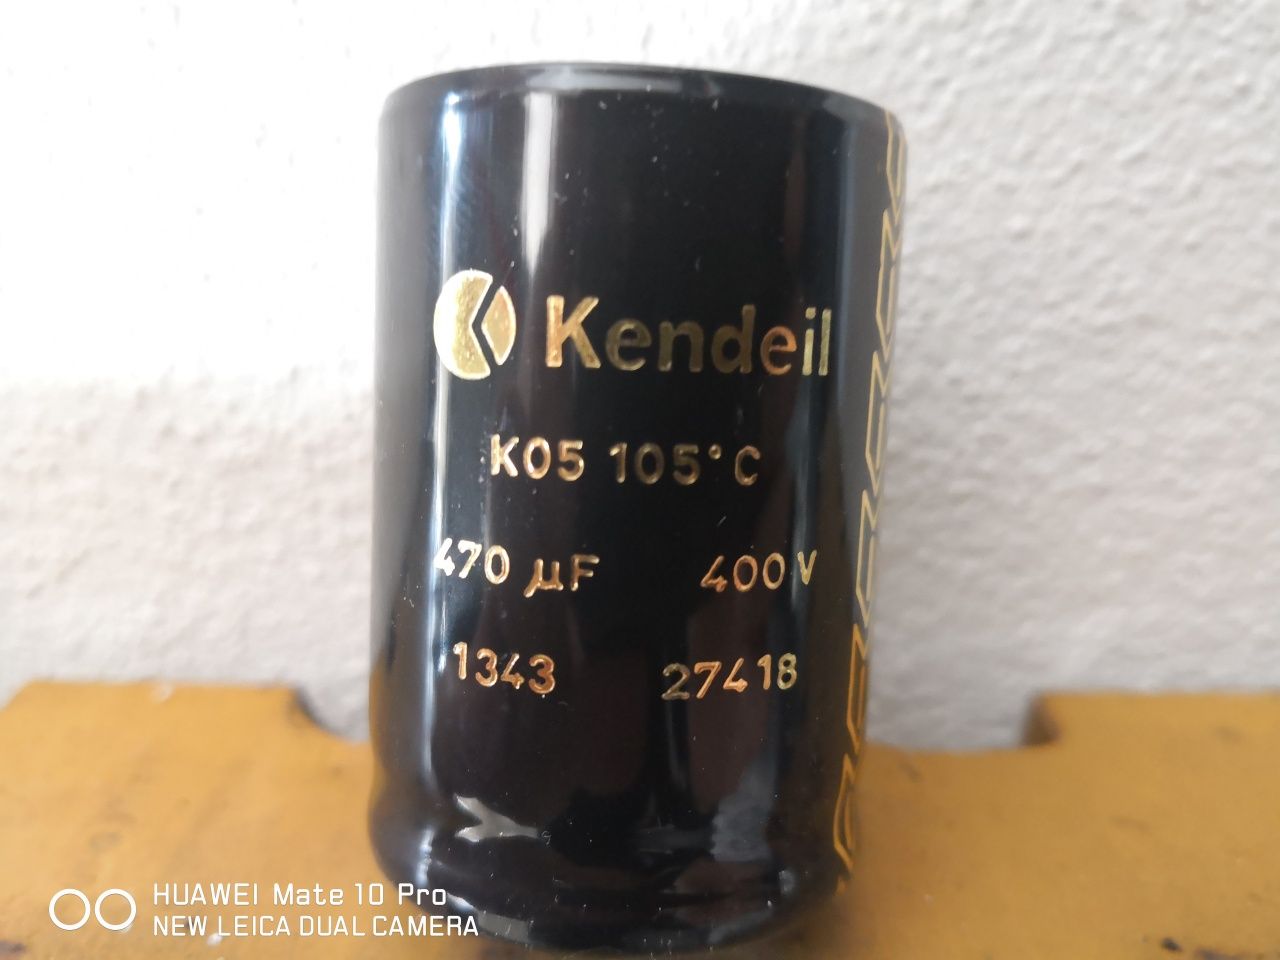 Condensatori Kendeil K05 105°C 400V 470uF